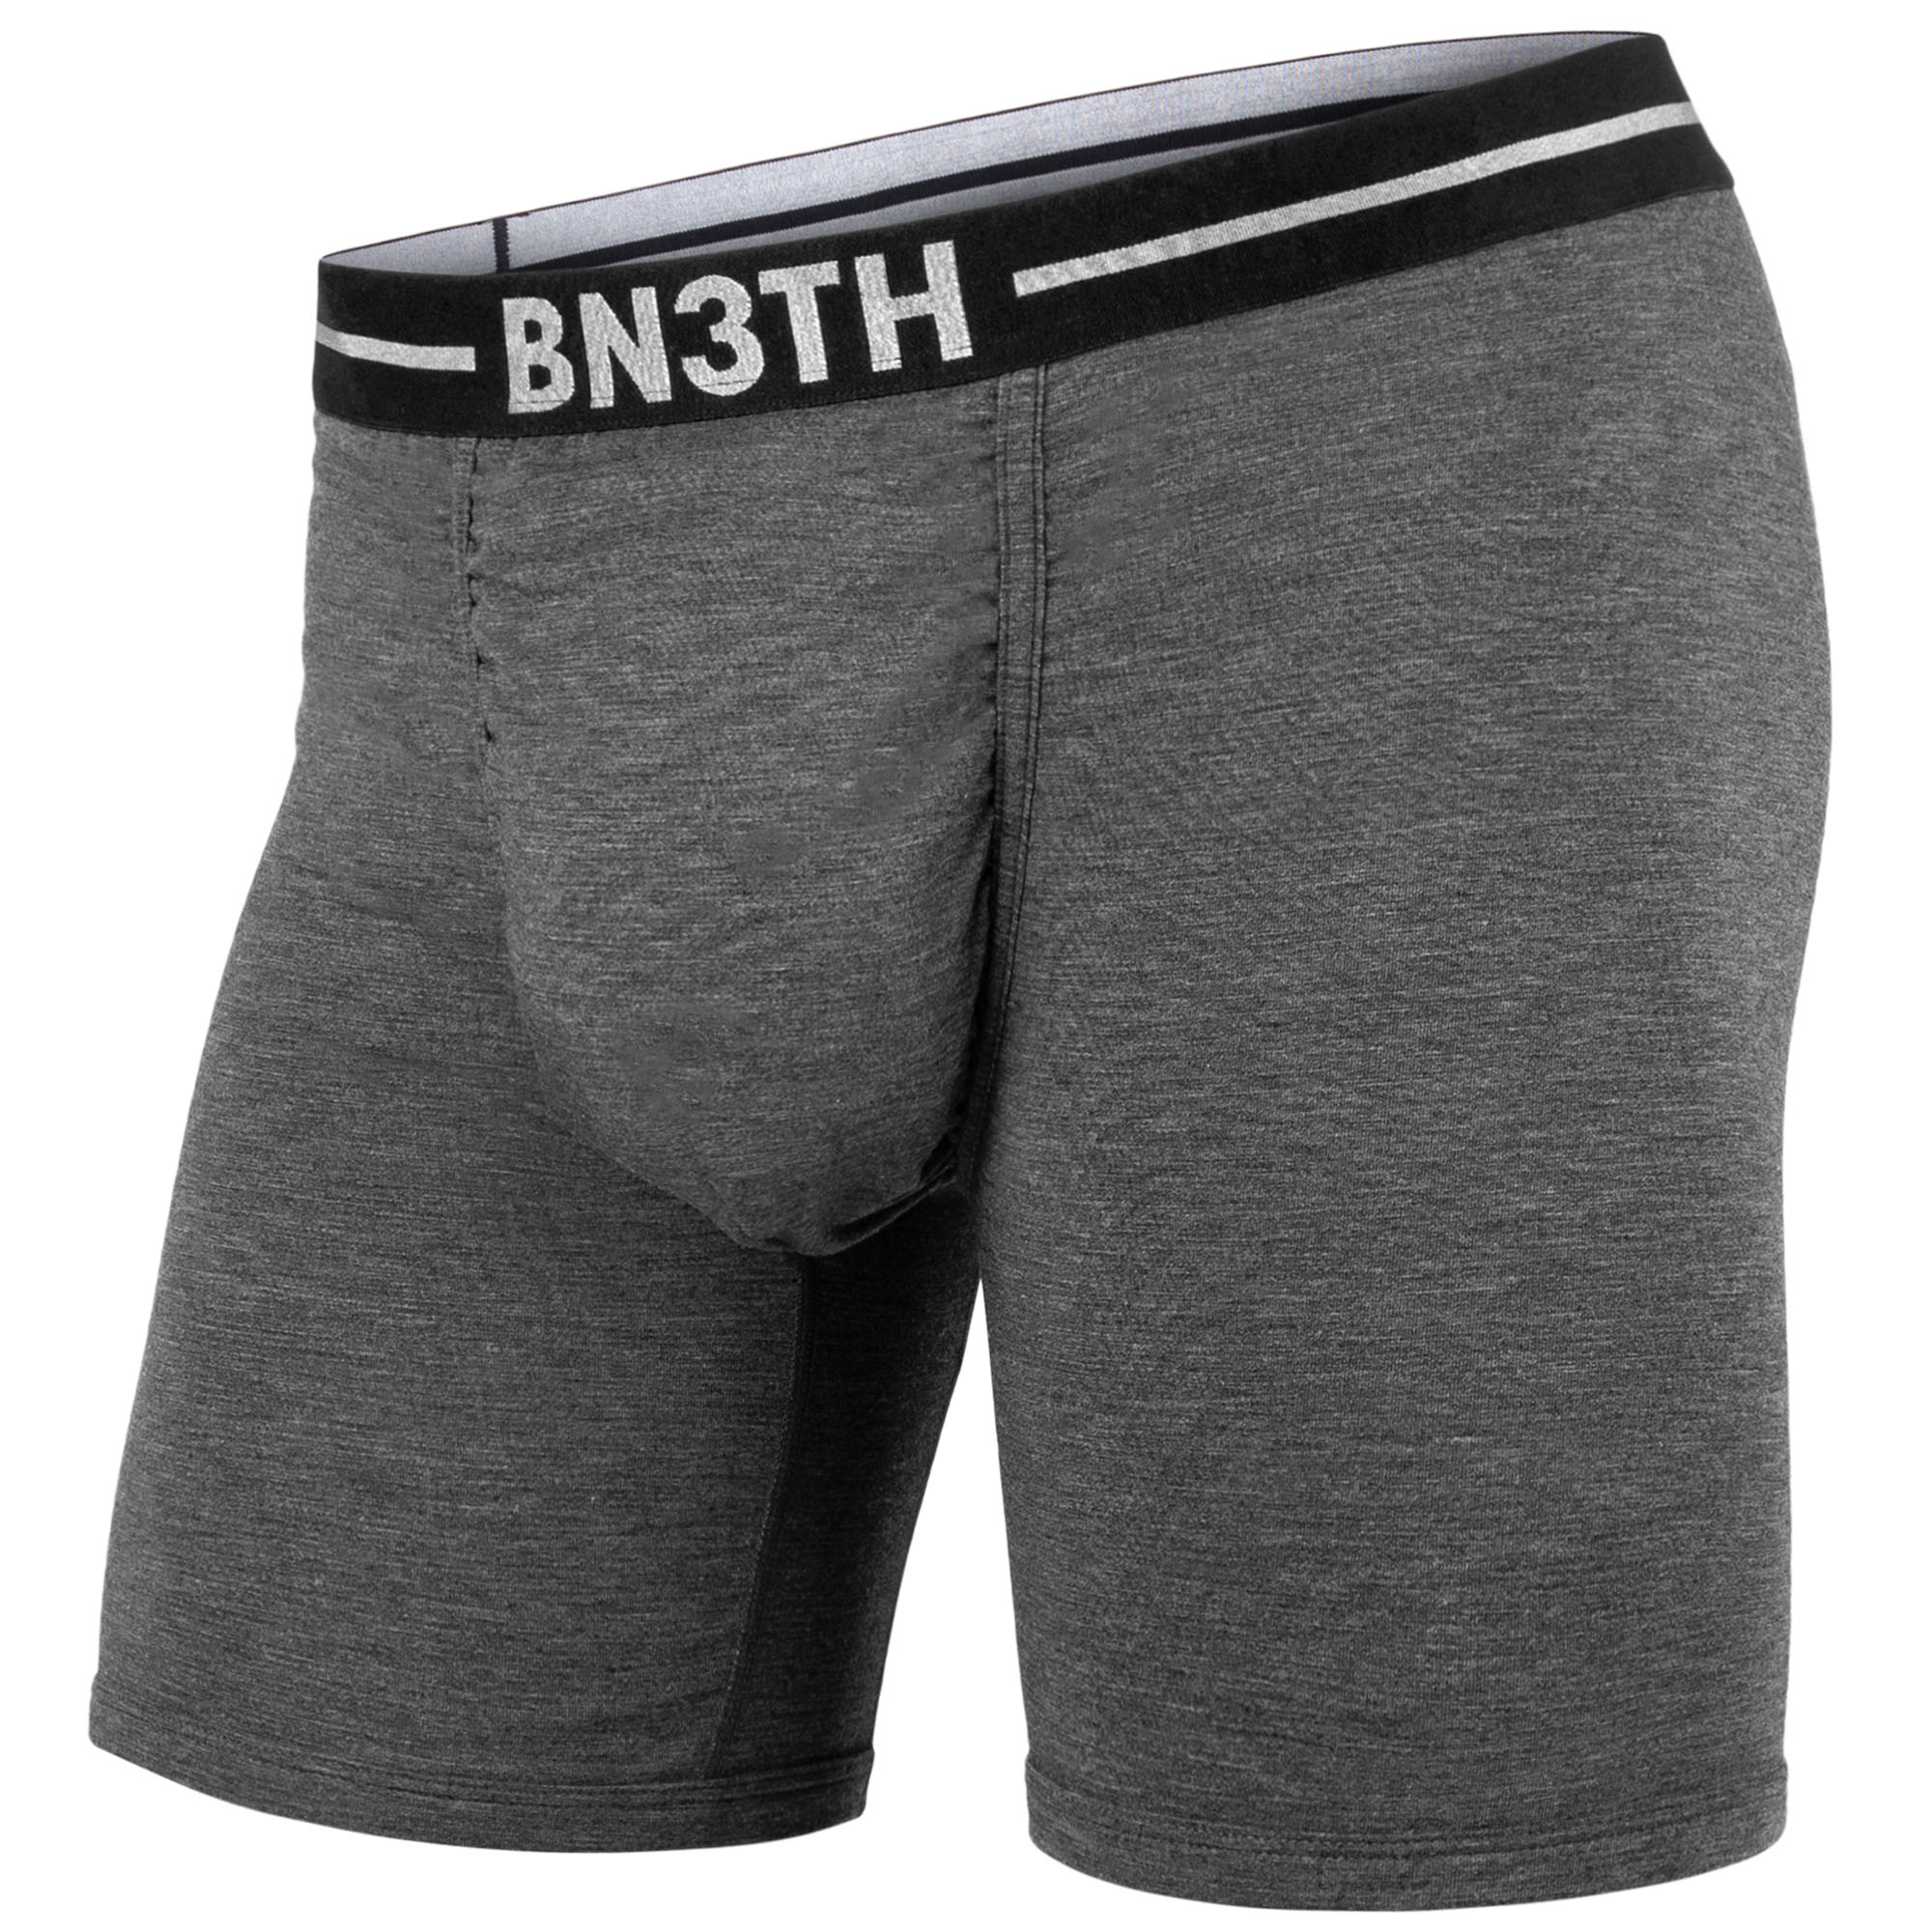 Men's Boxer Briefs  BN3TH Men's Underwear and Performance Shorts